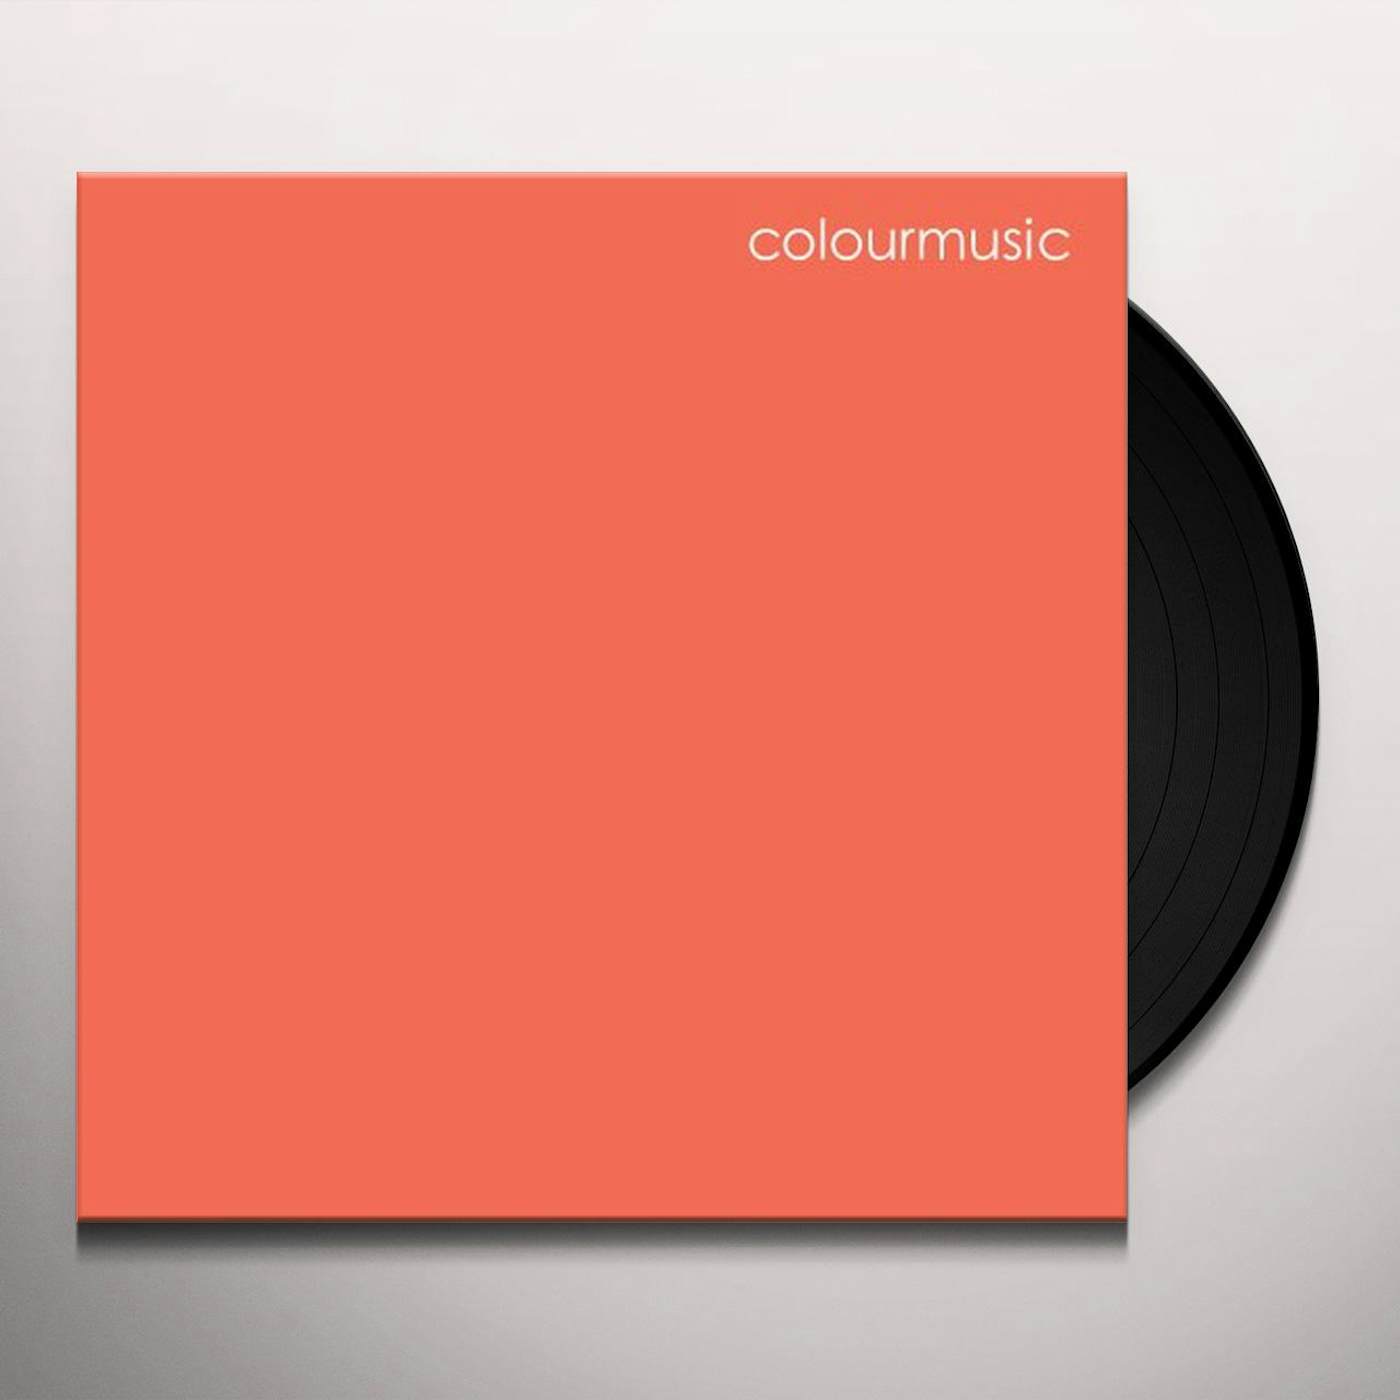 Colourmusic F MONDAY ORANGE FEBRUARY VENUS LUNATIC 1 OR 13 Vinyl Record